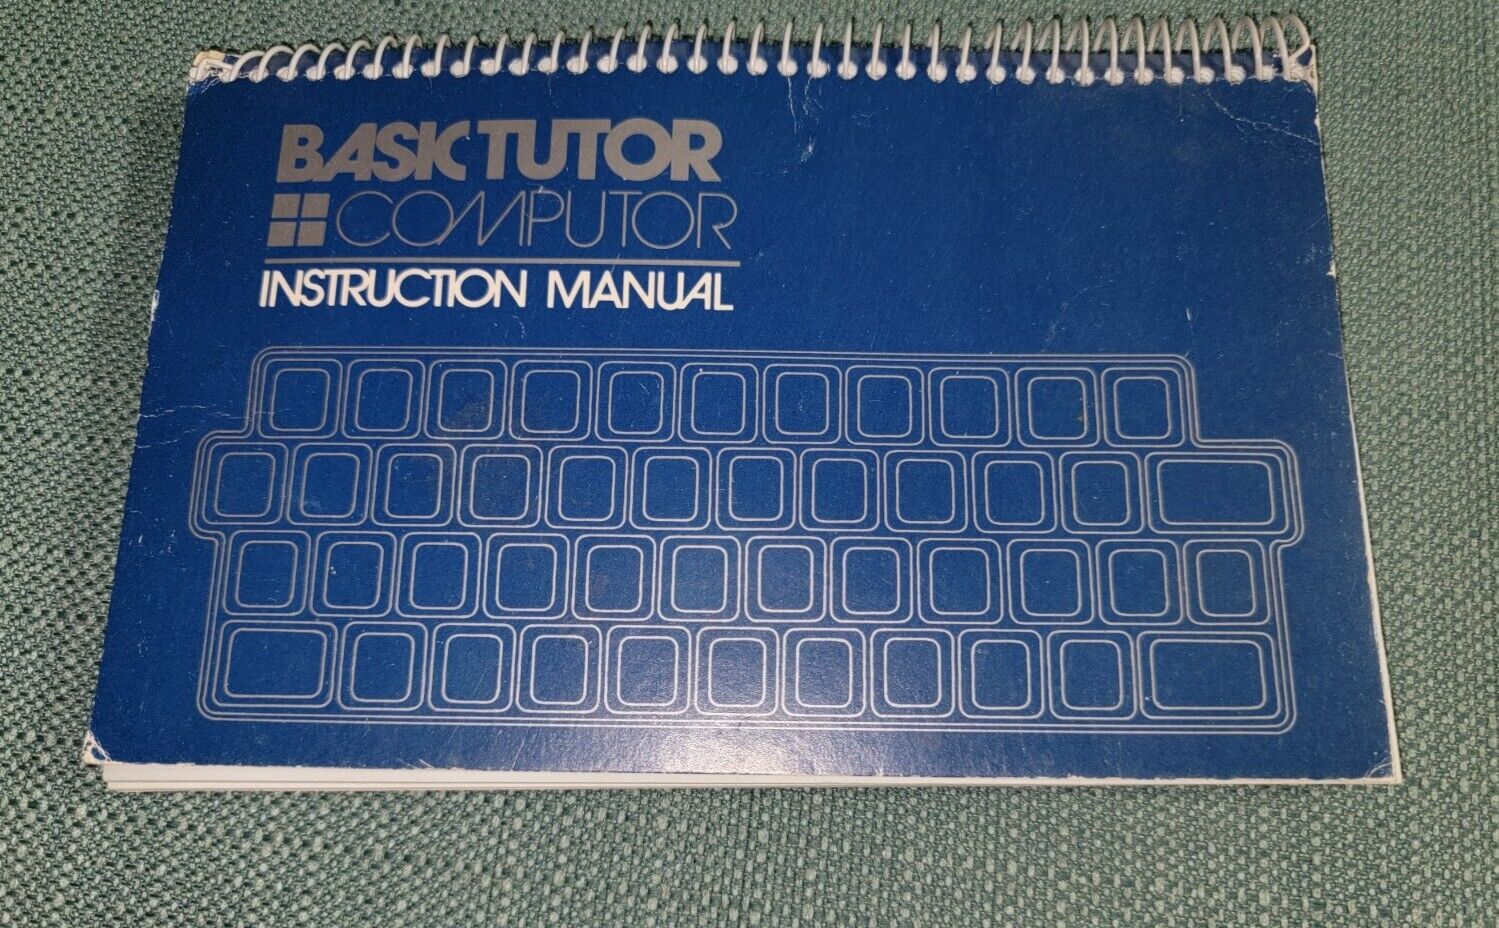 RARE Vintage 1986 VTECH BASIC TUTOR COMPUTOR Teaches Basic Programing MANUAL 